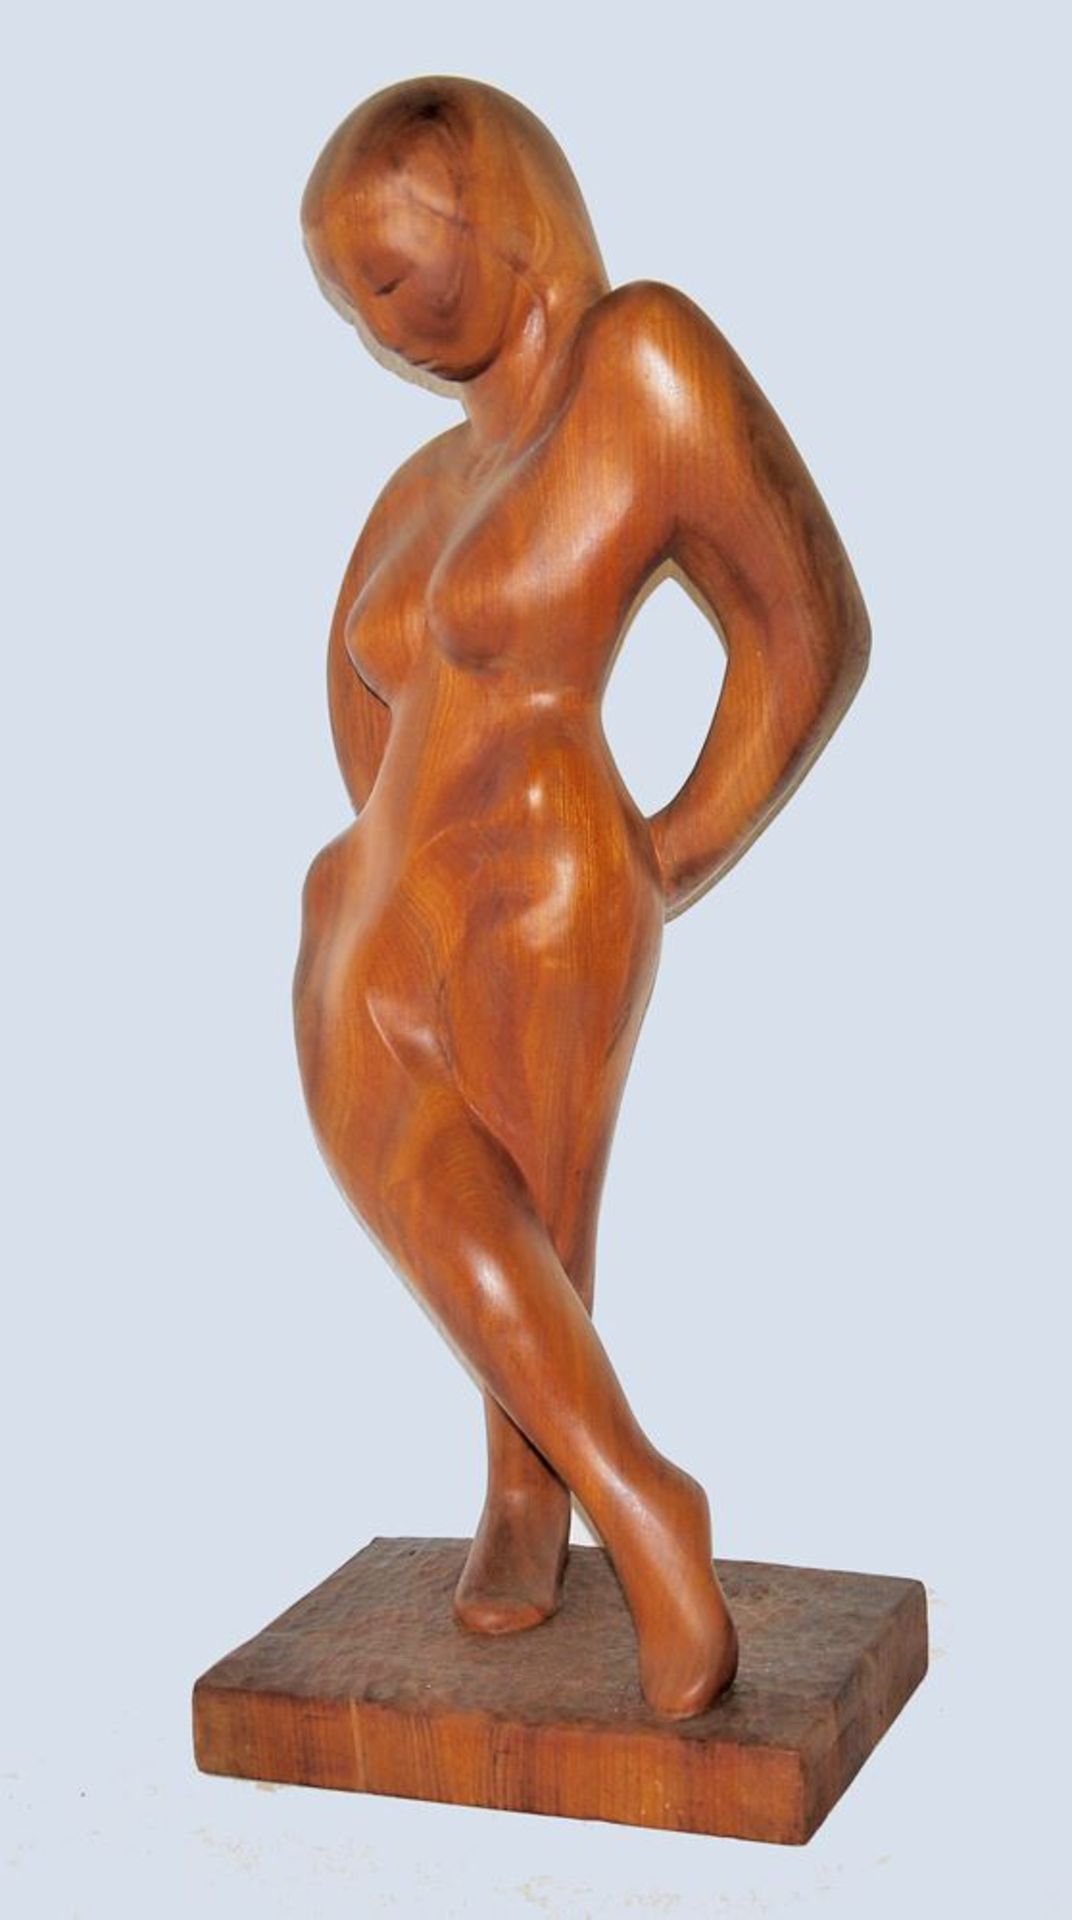 Ortrud Heuser-Hickler, Standing, wood sculpture from 1986